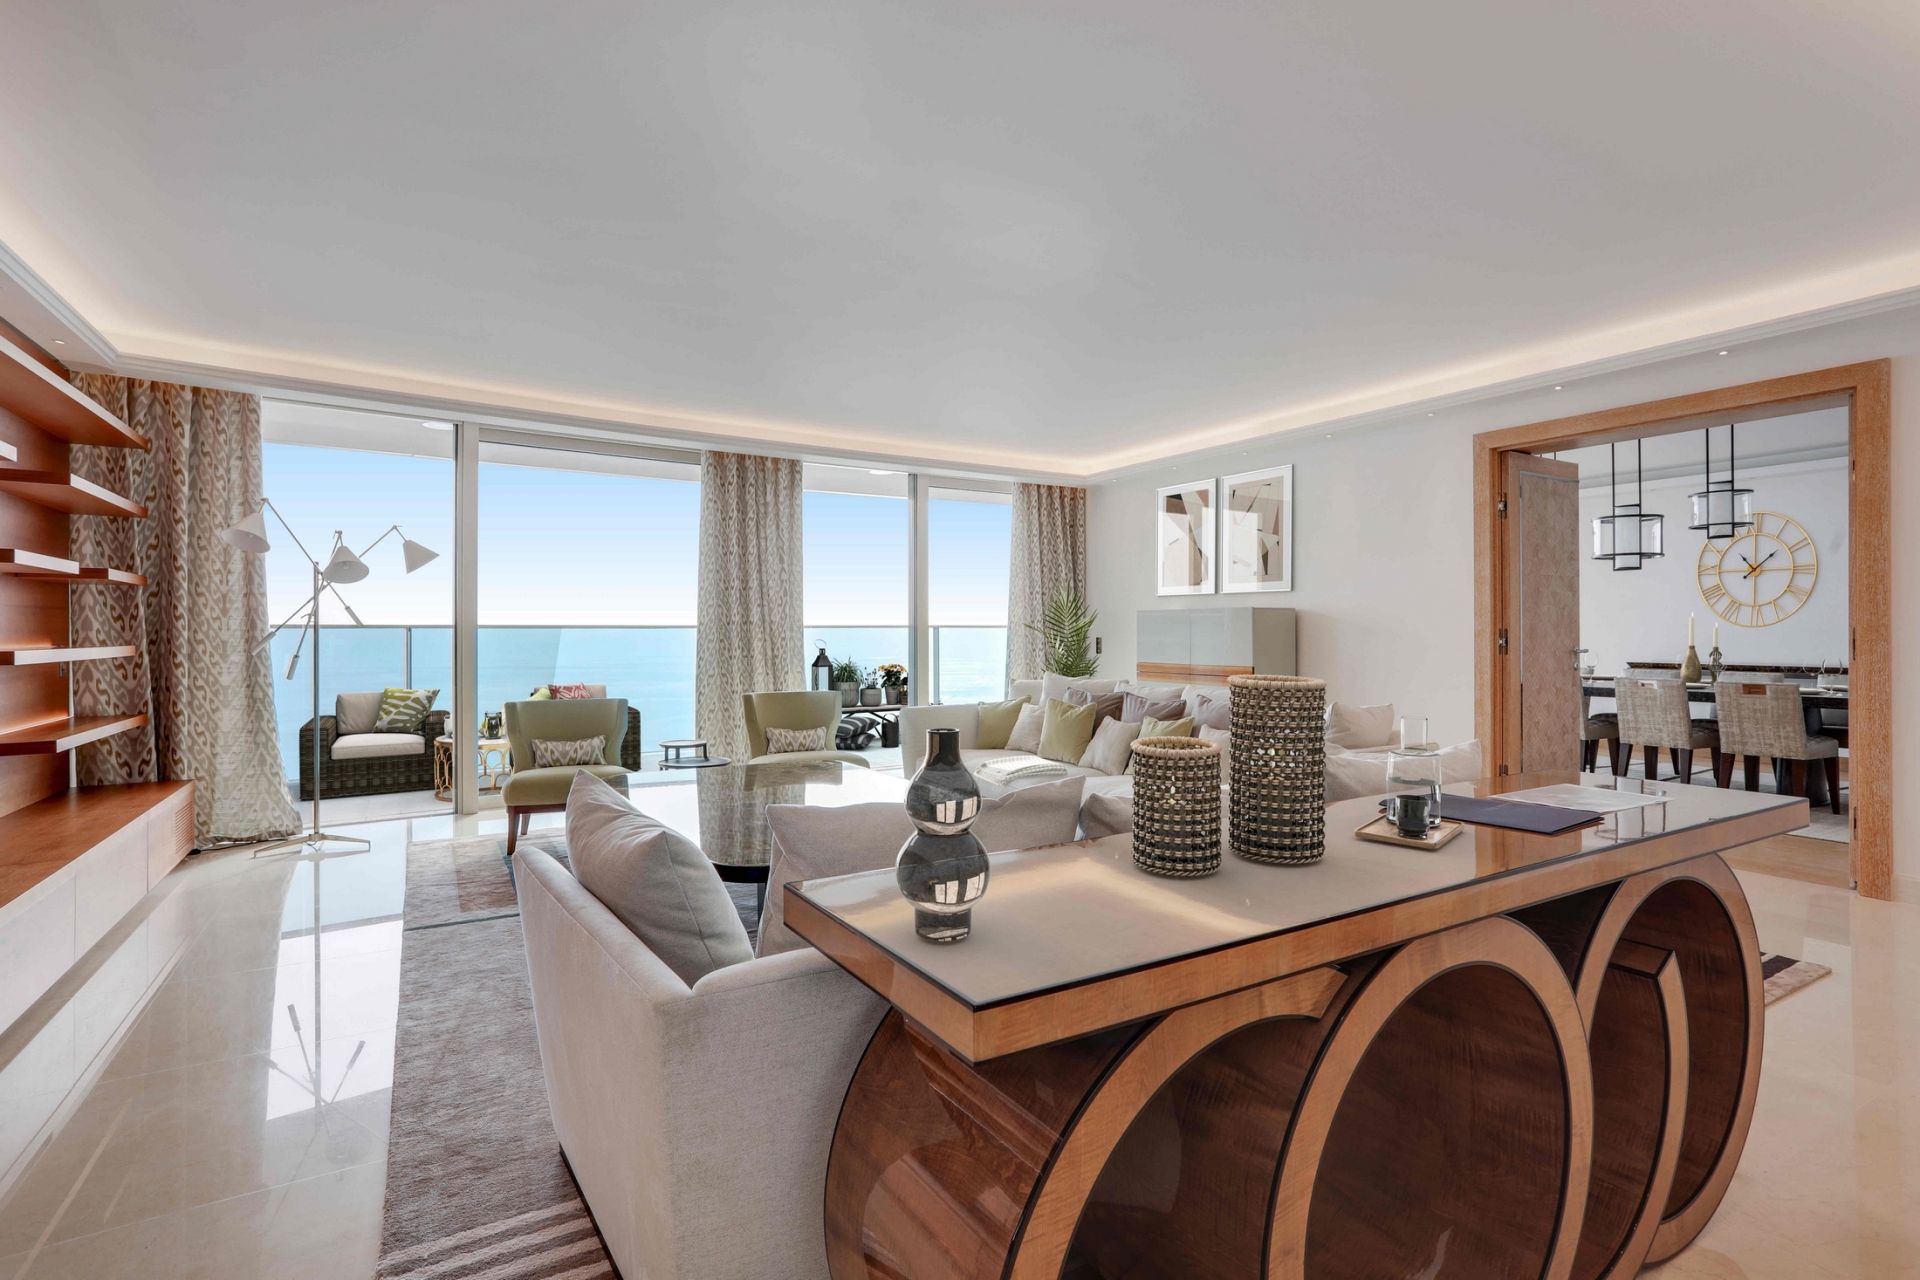 Sale Apartment Monaco (98000) 427.2 m²